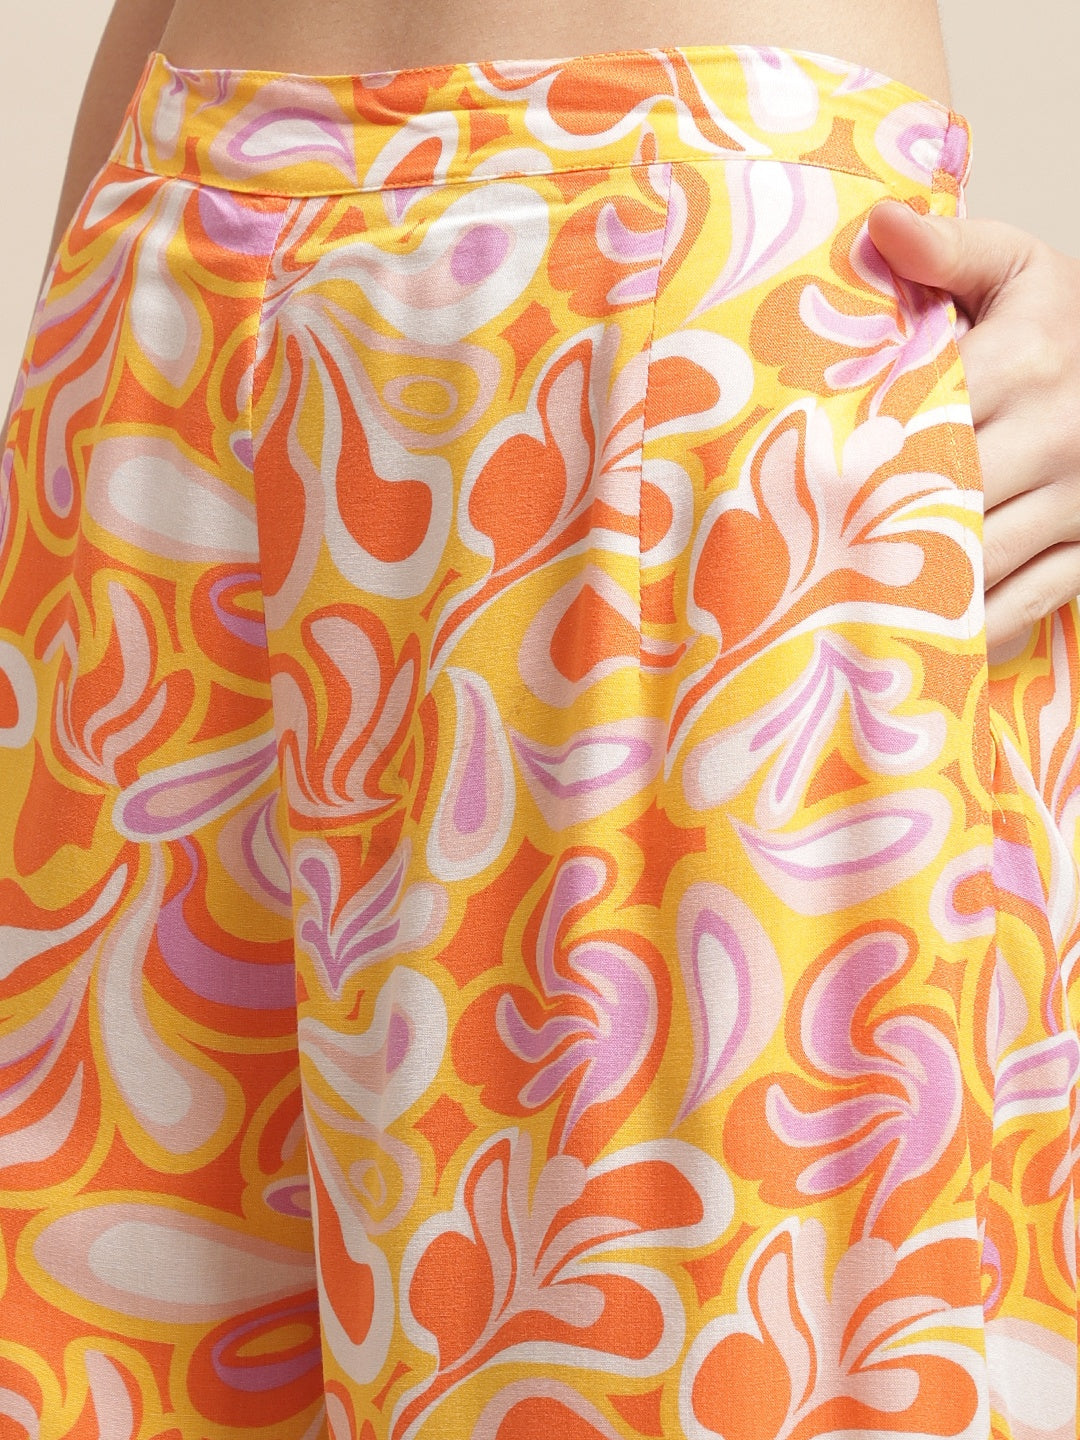 Orange Color Abstract Printed Viscose Rayon Pyjama &amp; Top Beachwear For Woman Claura Designs Pvt. Ltd. Beachwear Beachwear, Beachwear_size, Coverup, orange color, Rayon, Swimwear